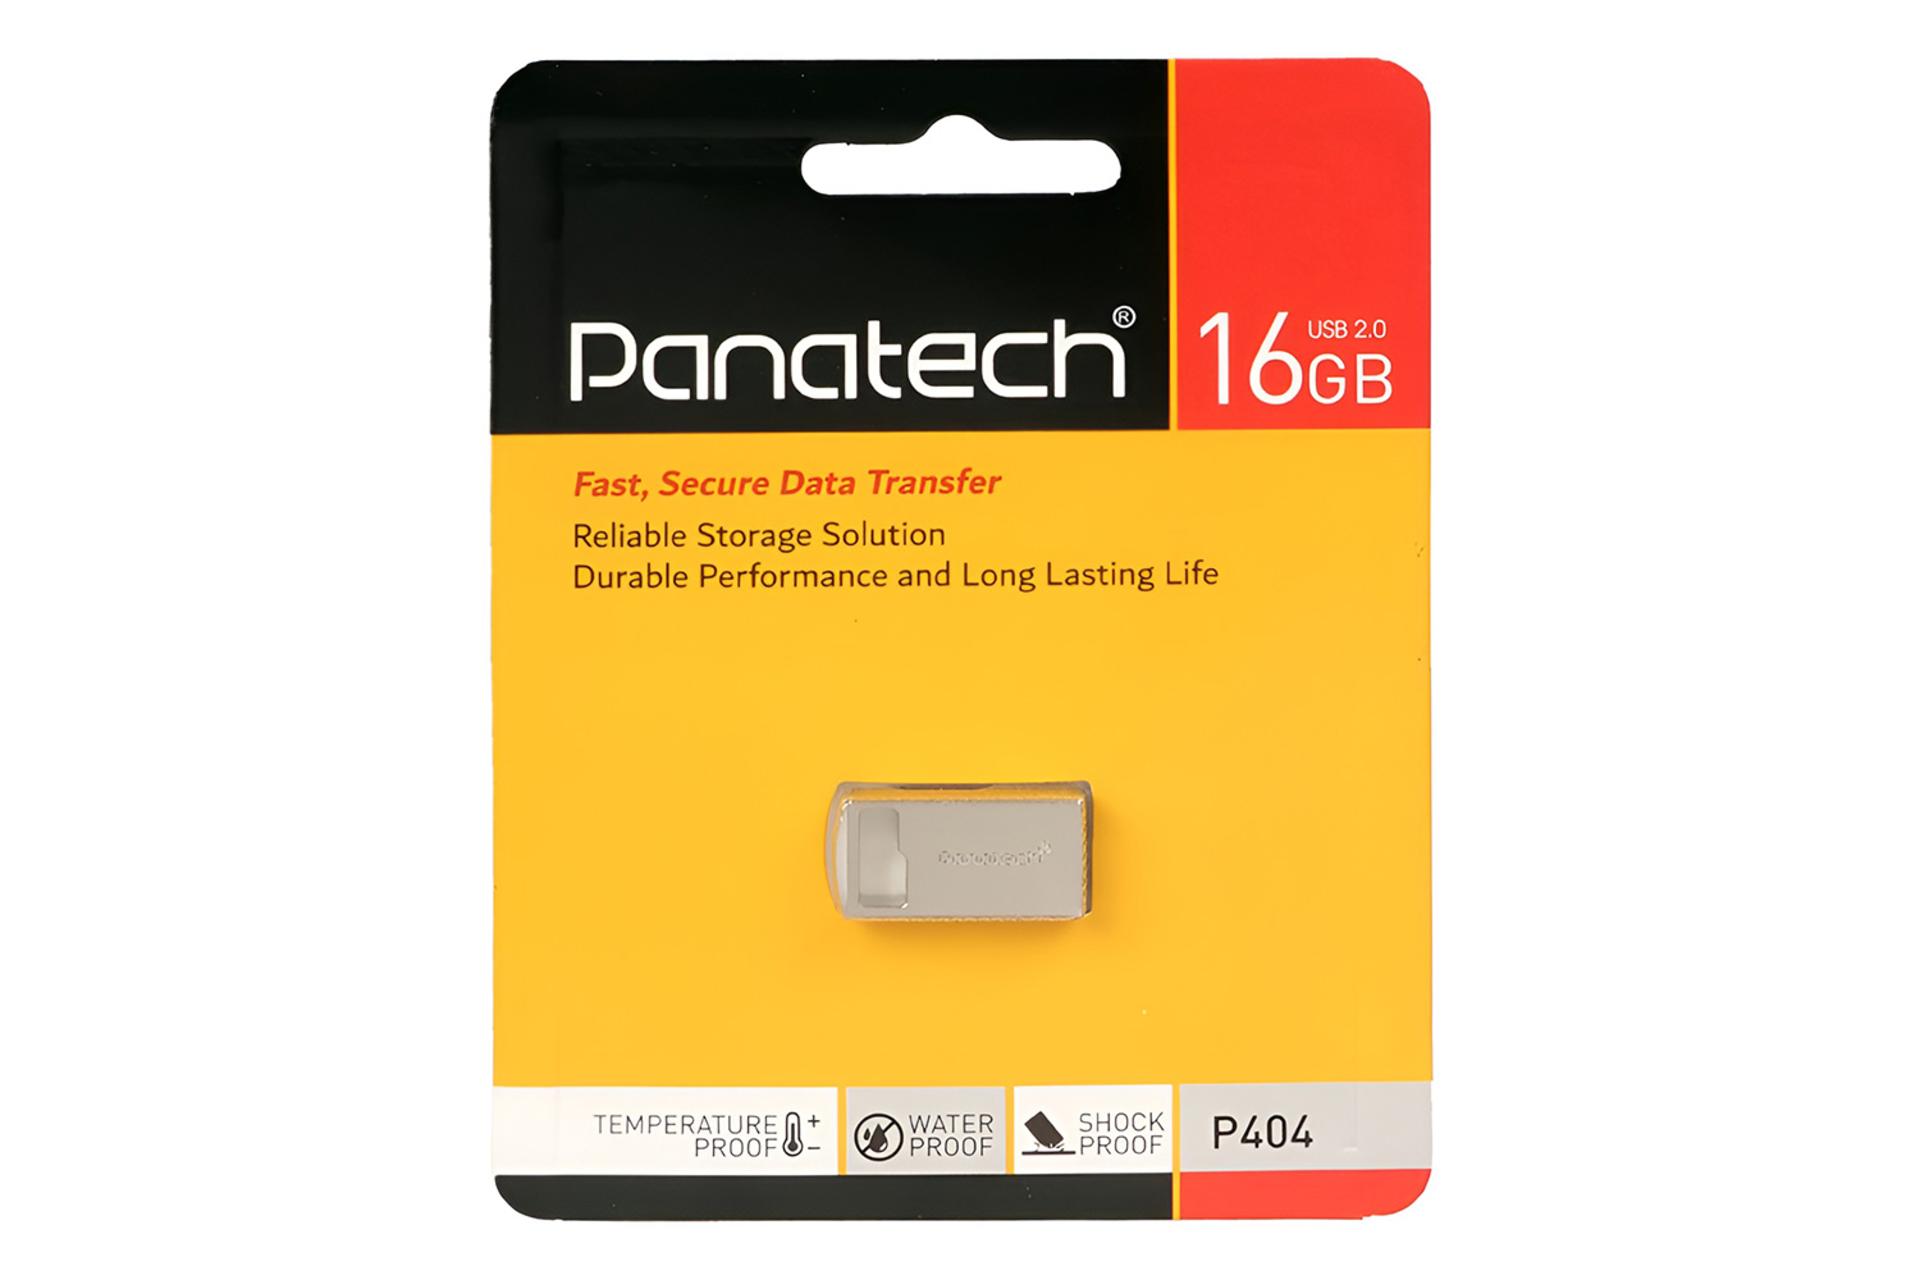 جعبه فلش مموری پاناتک Panatech P404 16GB